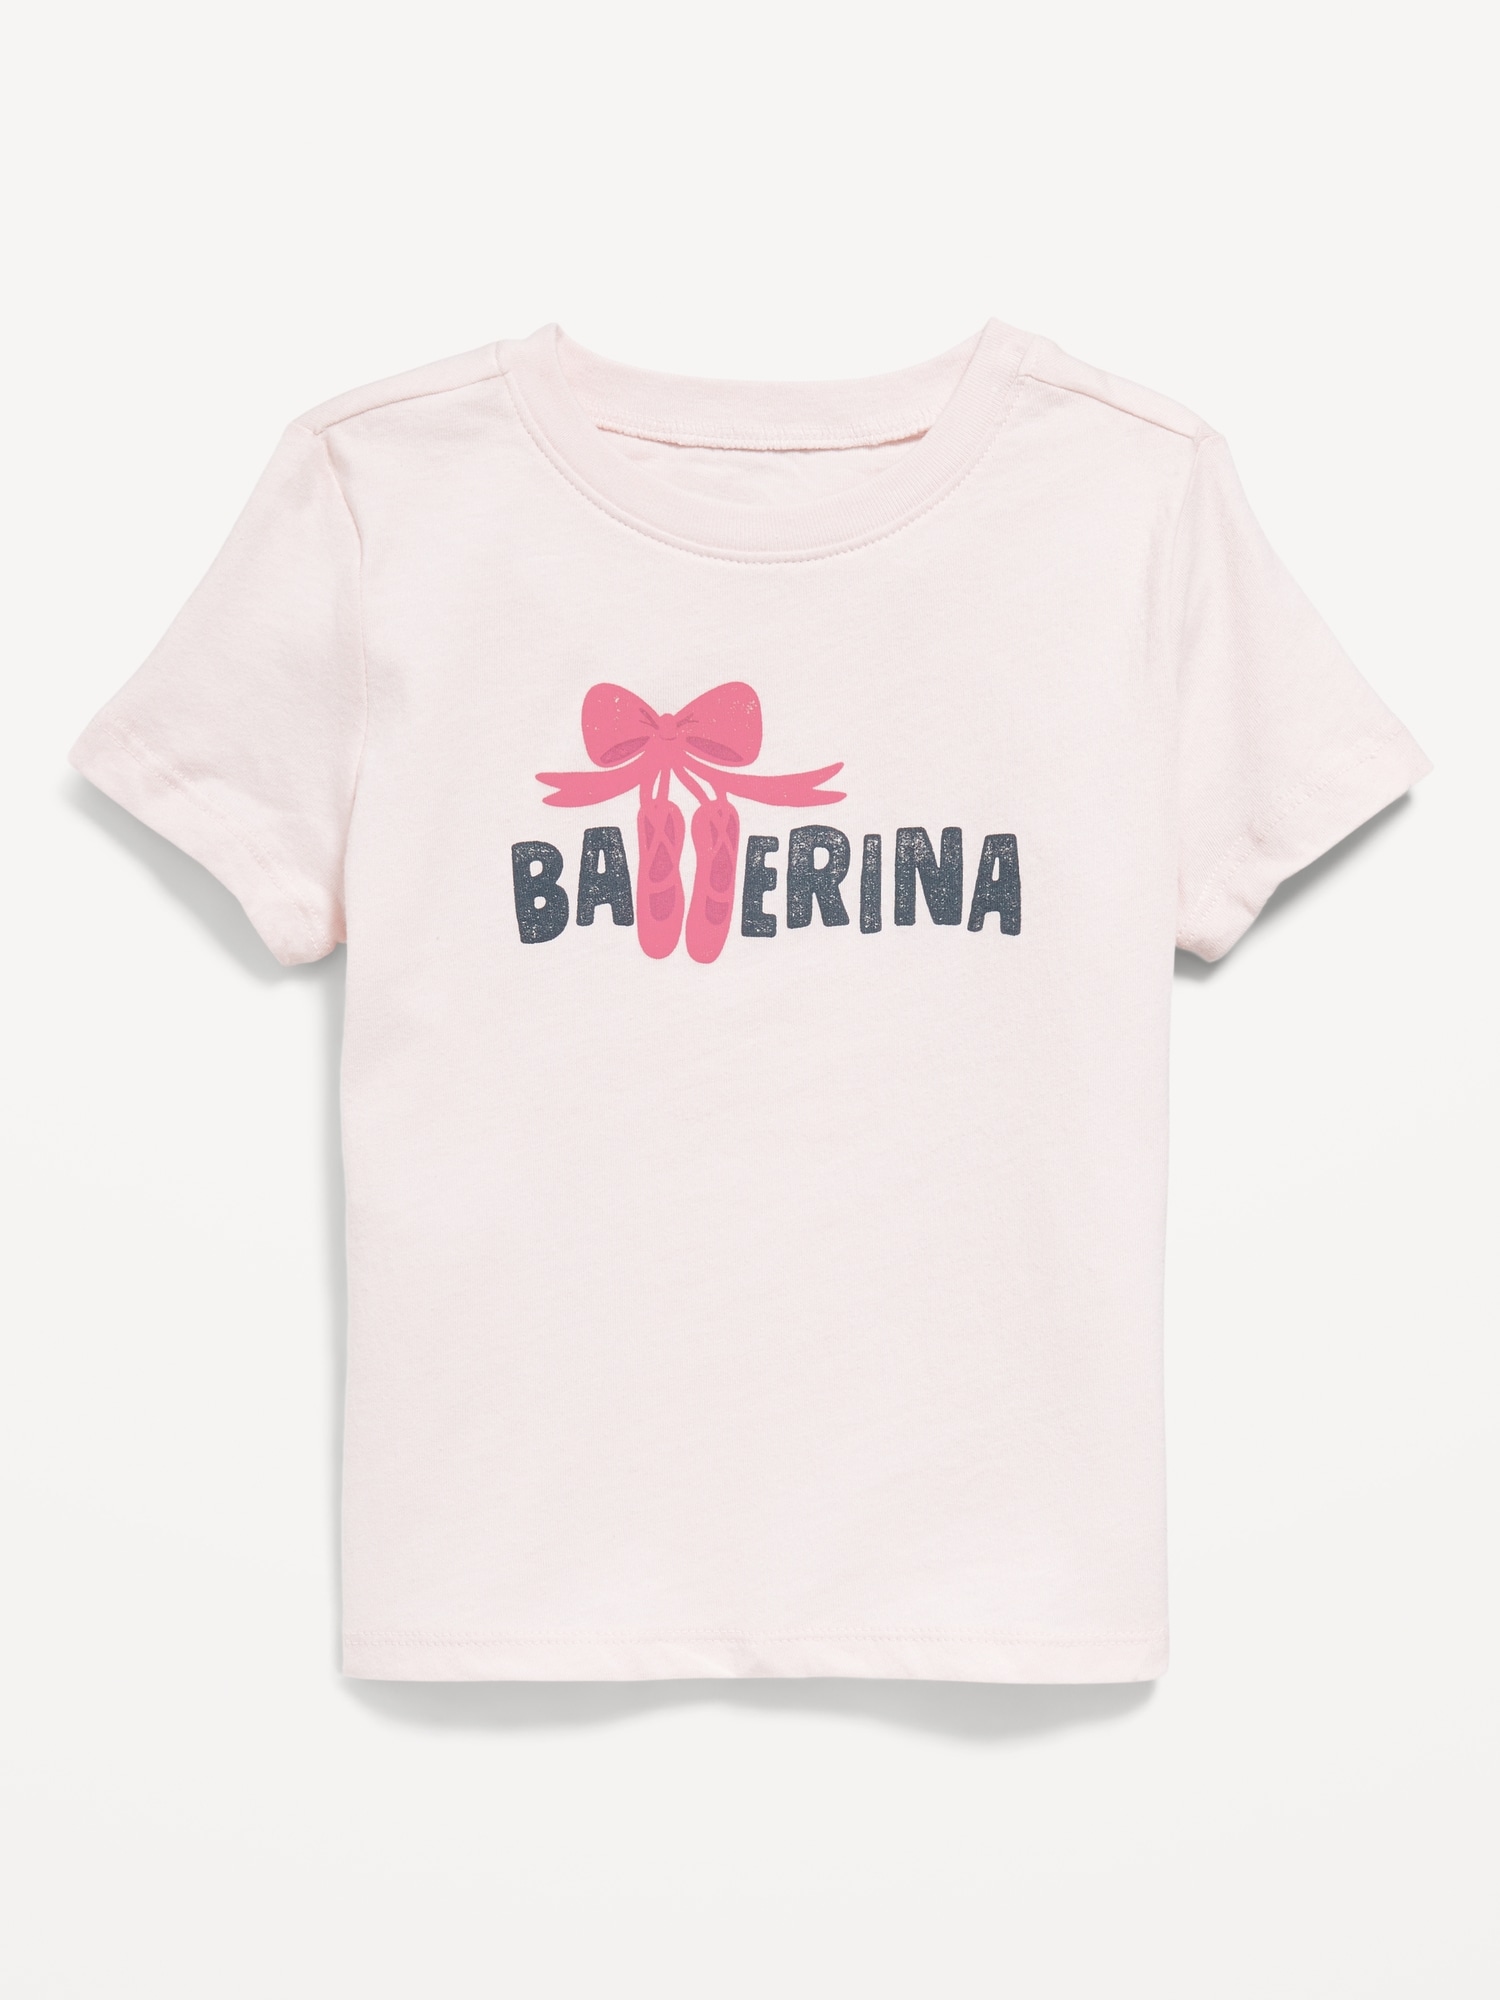 Short-Sleeve Graphic T-Shirt for Toddler Girls